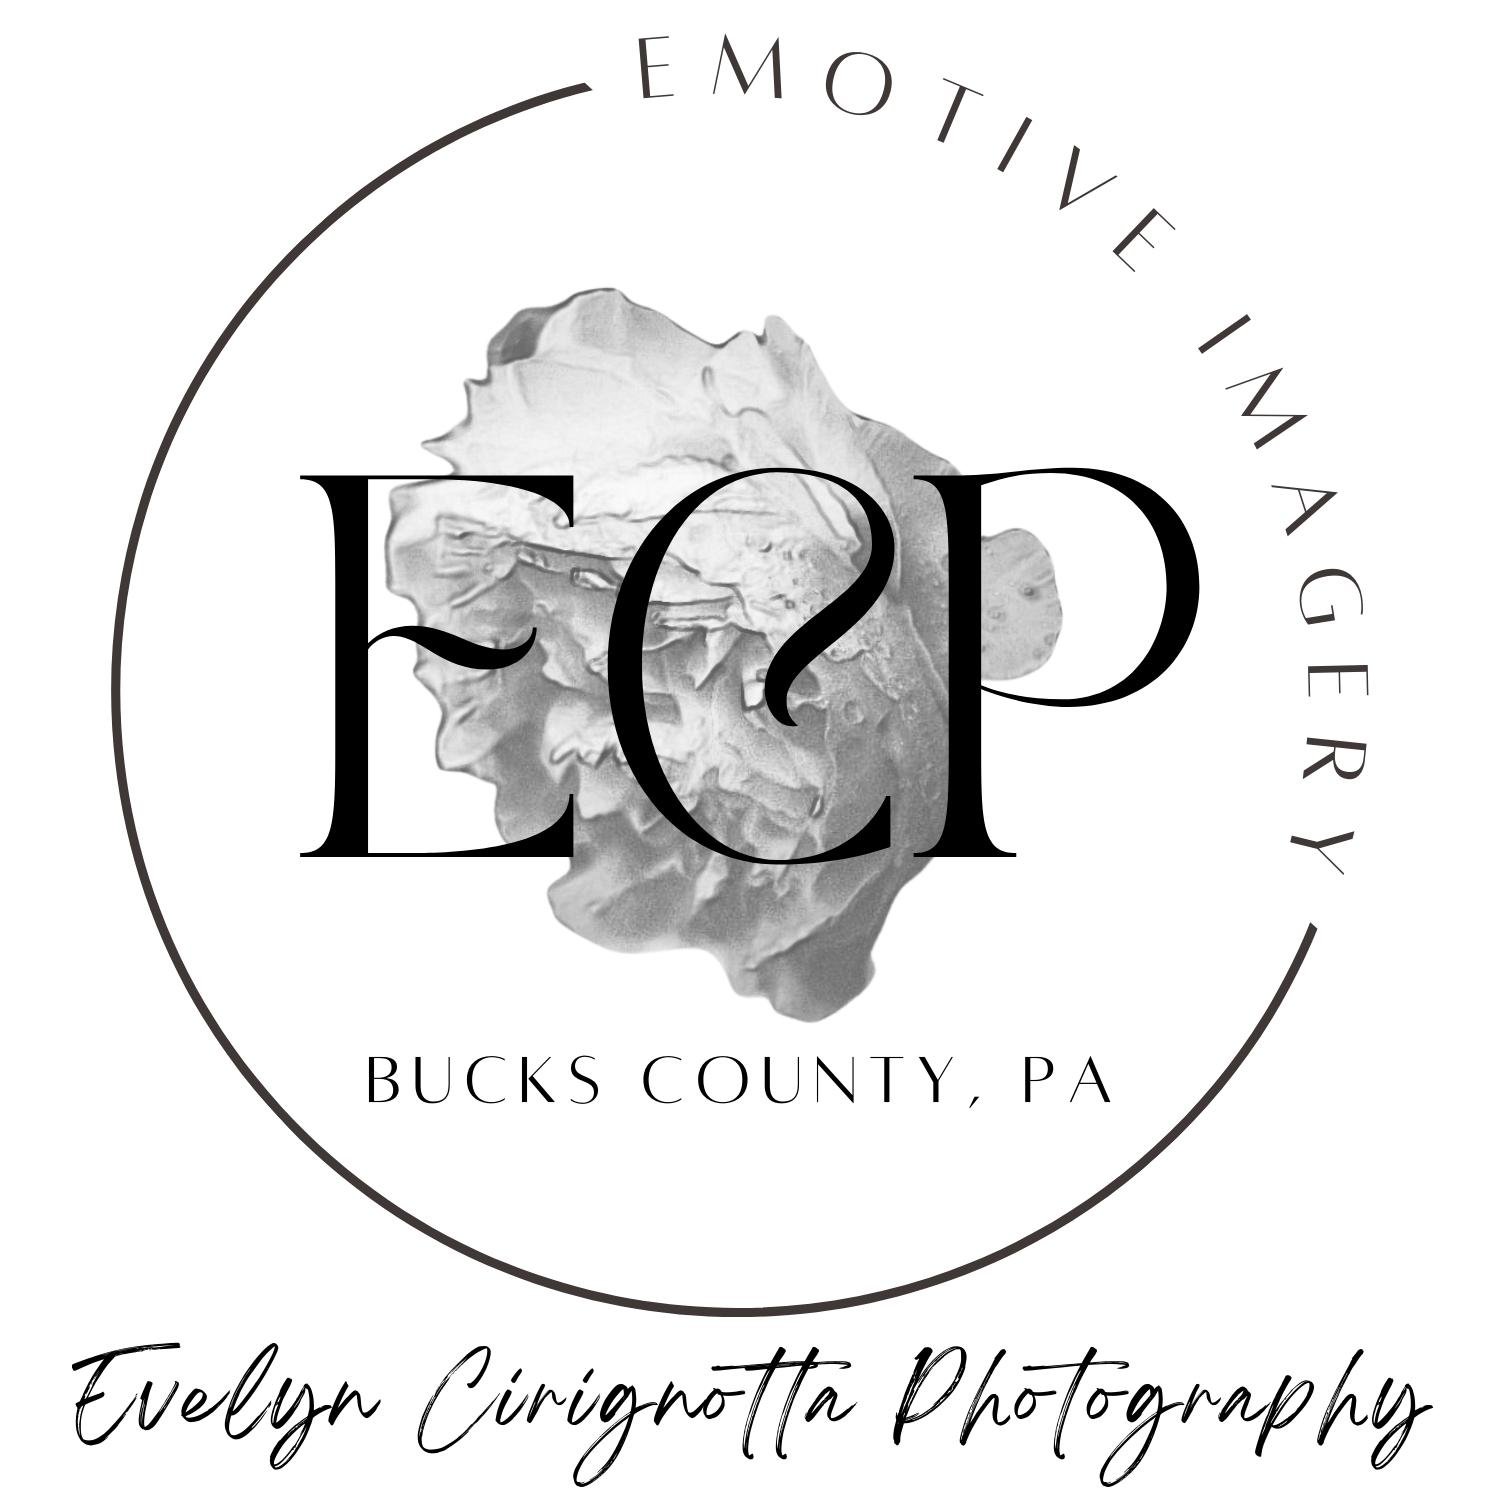 Evelyn Cirignotta Photography- Emotive Family Photographer based in Bucks County Pennsylvania 